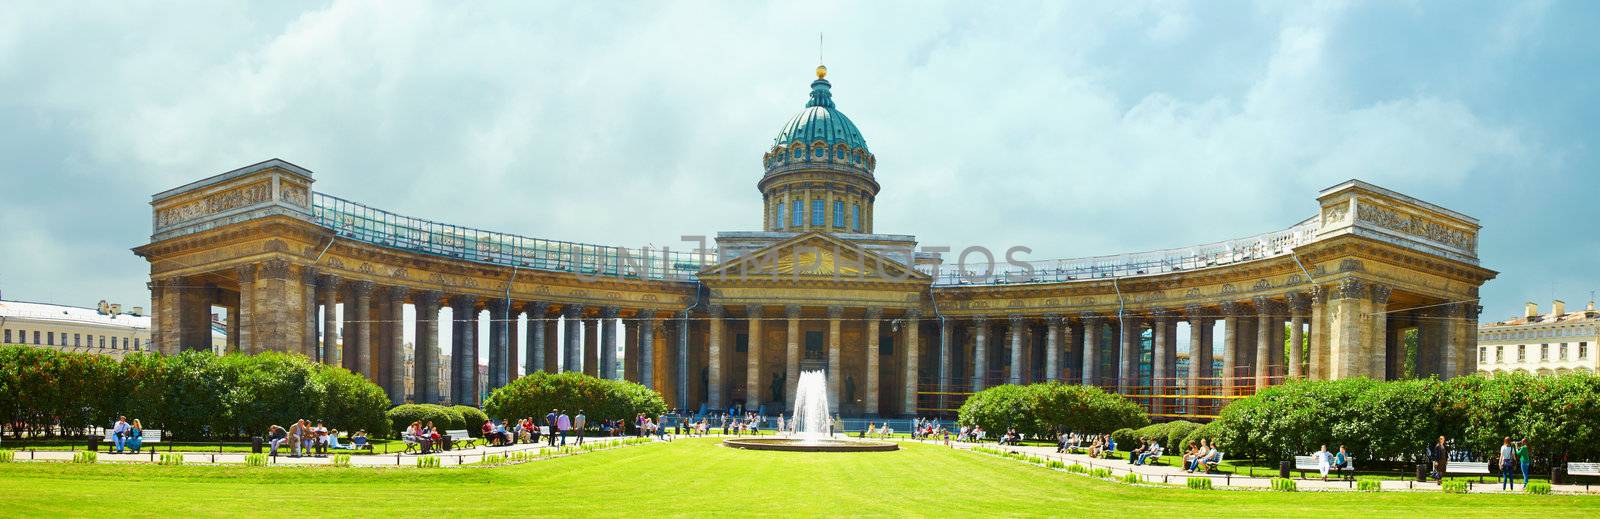 Kazansky cathedral - St. Petersburg by pzaxe